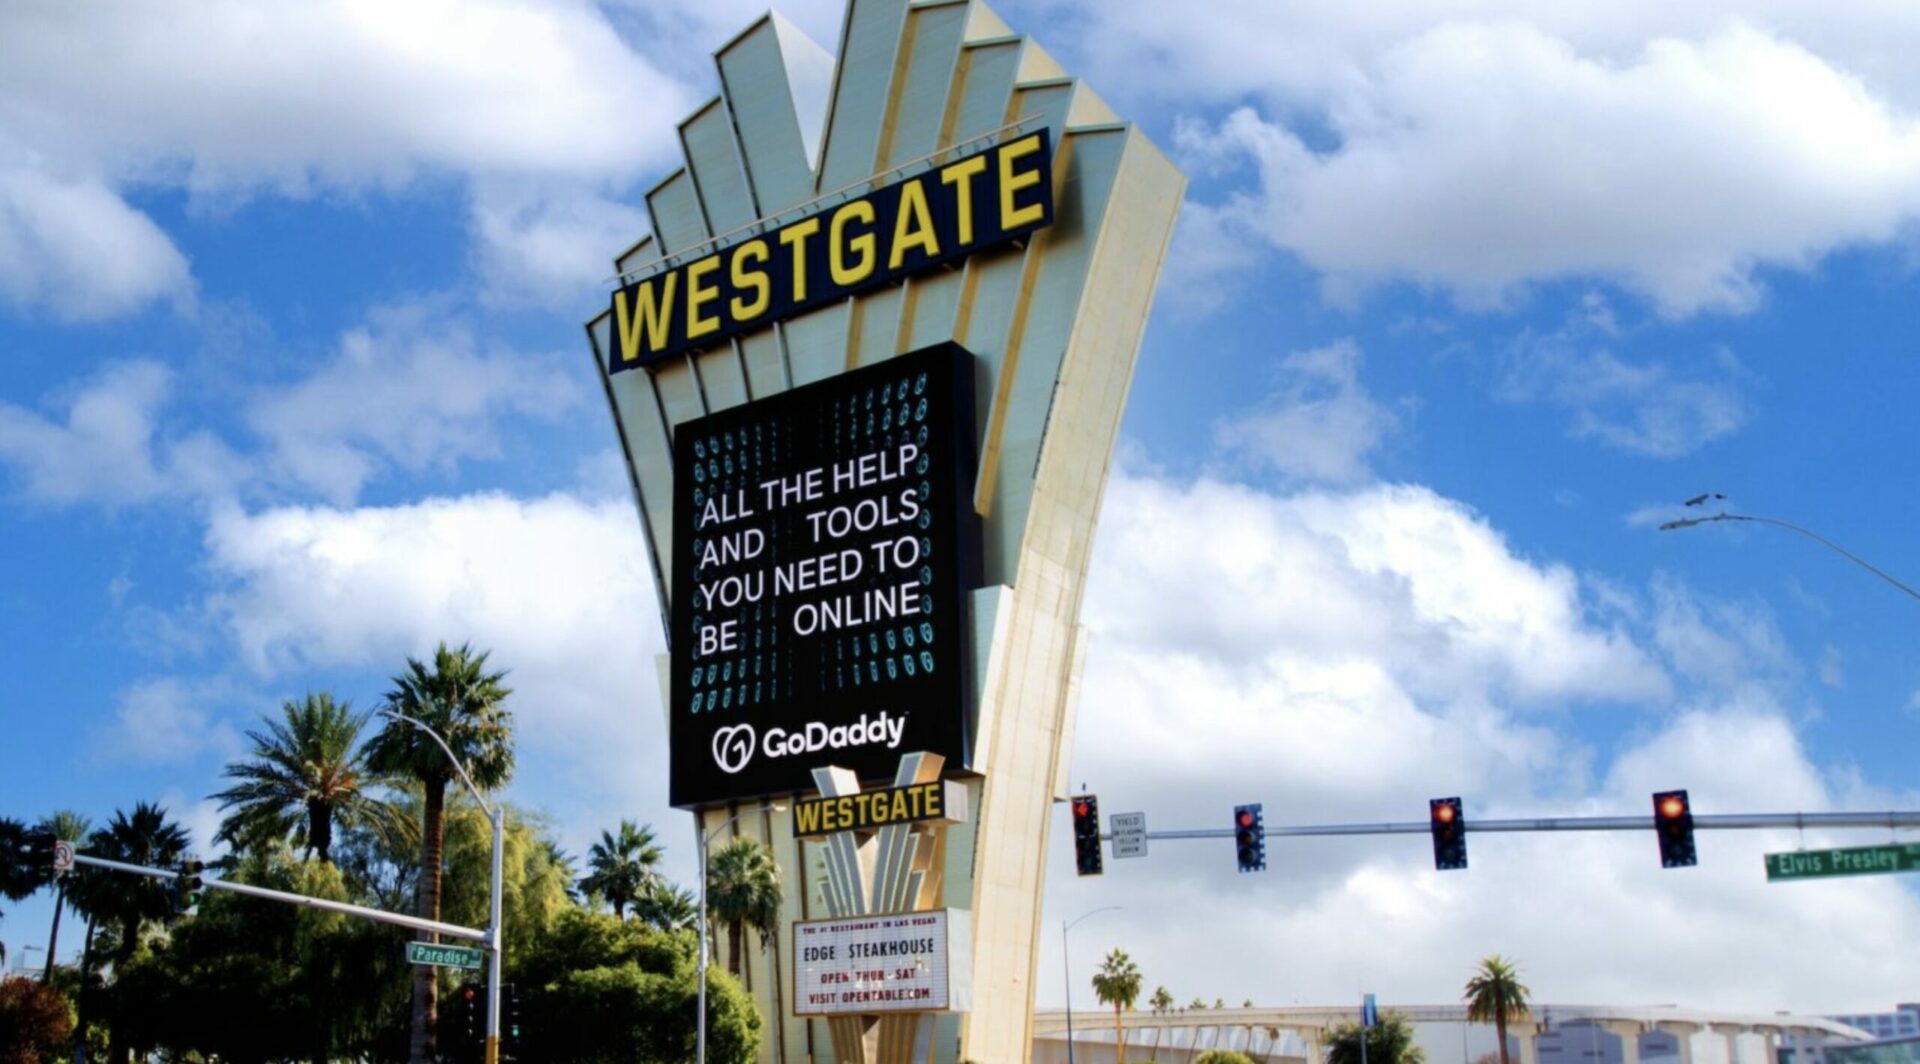 Spectacular billboard in Las Vegas